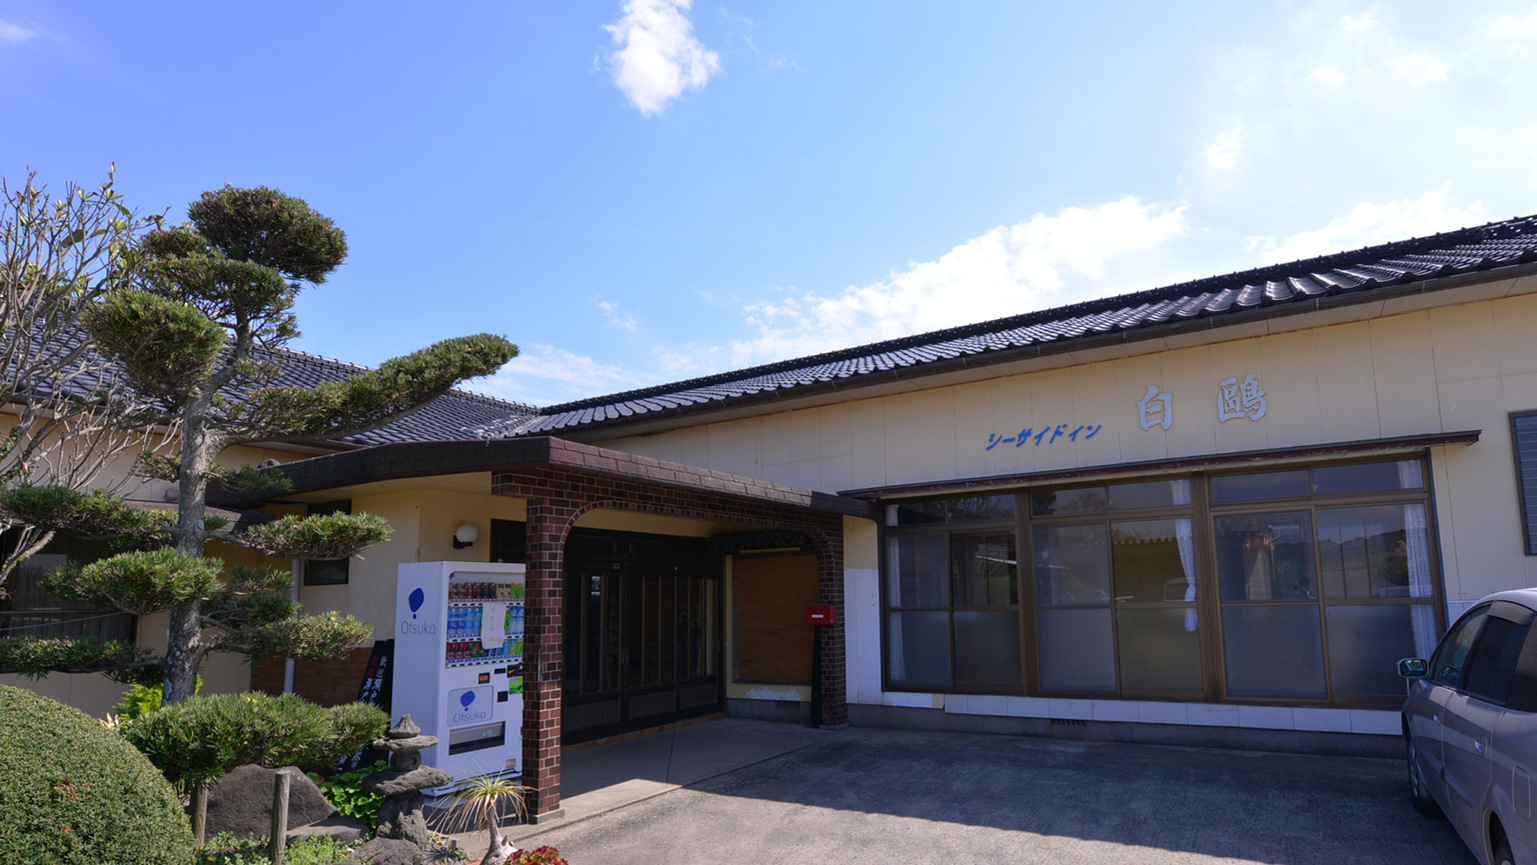 Seaside Inn Hakuo <Ikinoshima> in the Heart of Iki, Japan: Reviews on Seaside Inn Hakuo <Ikinoshima>